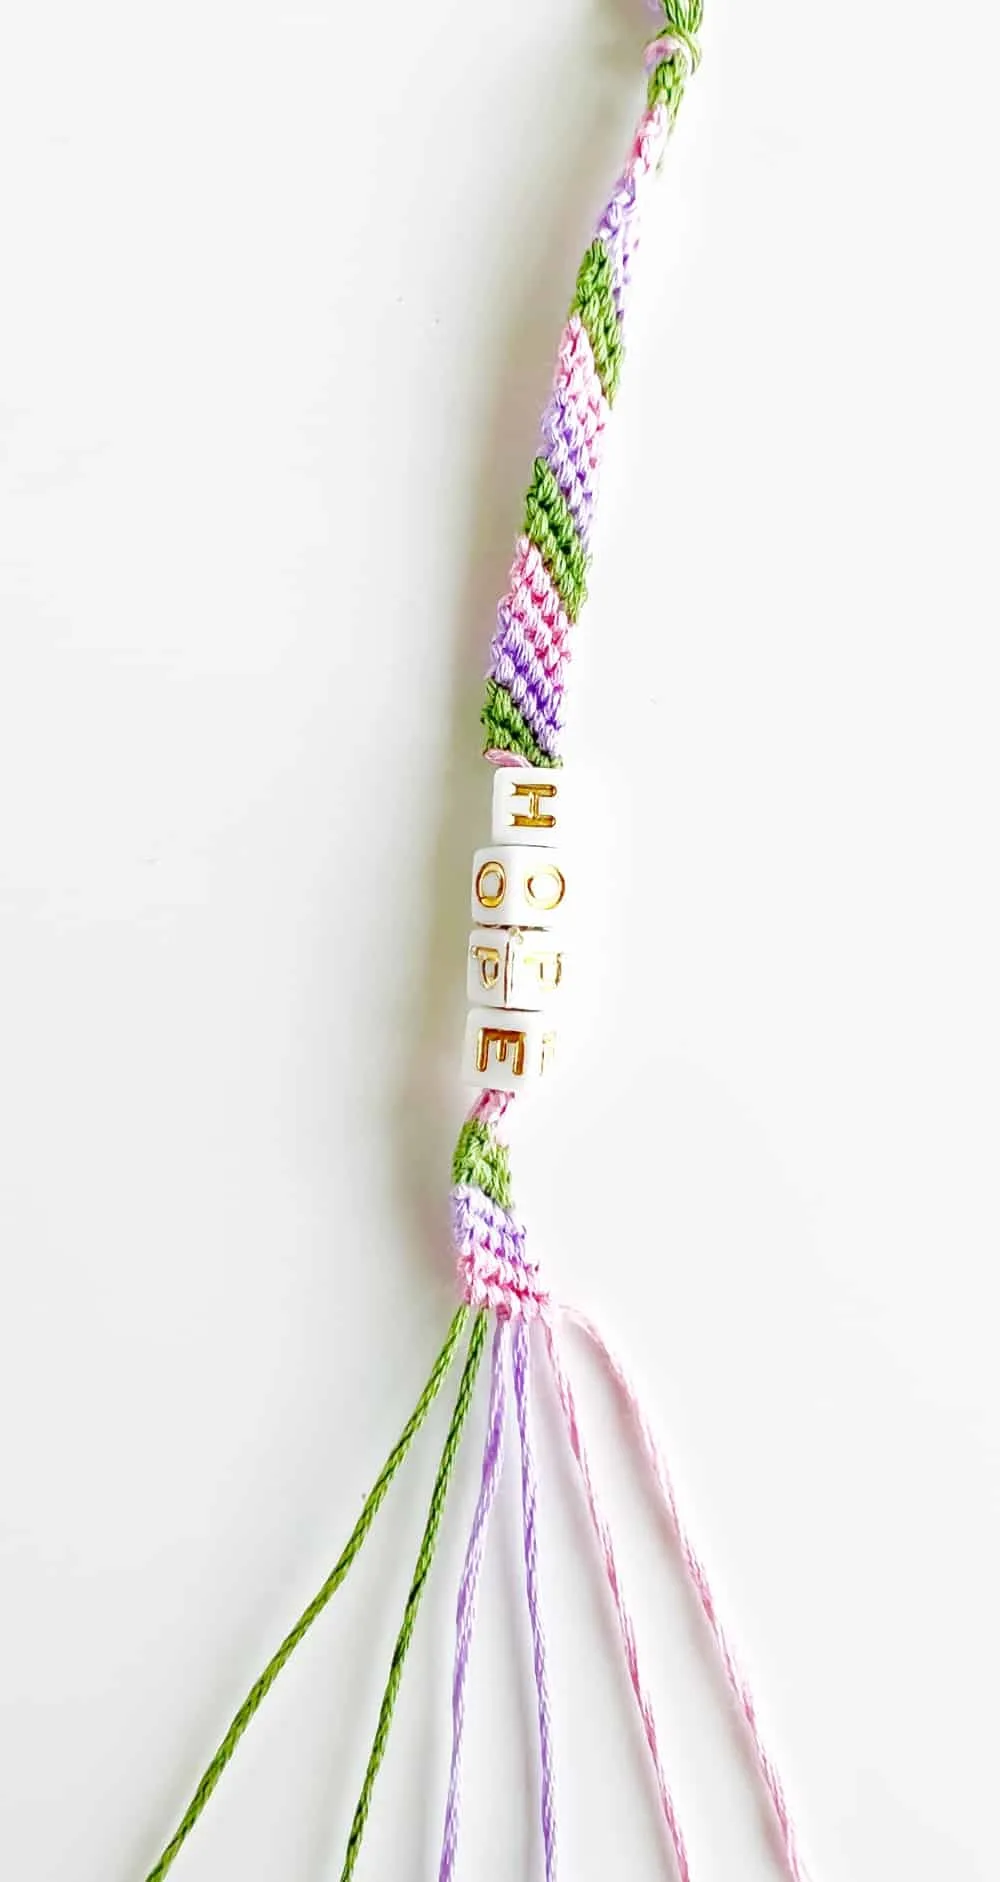 DMC Prism Embroidery Floss Friendship Bracelets Review 2020 | The Strategist